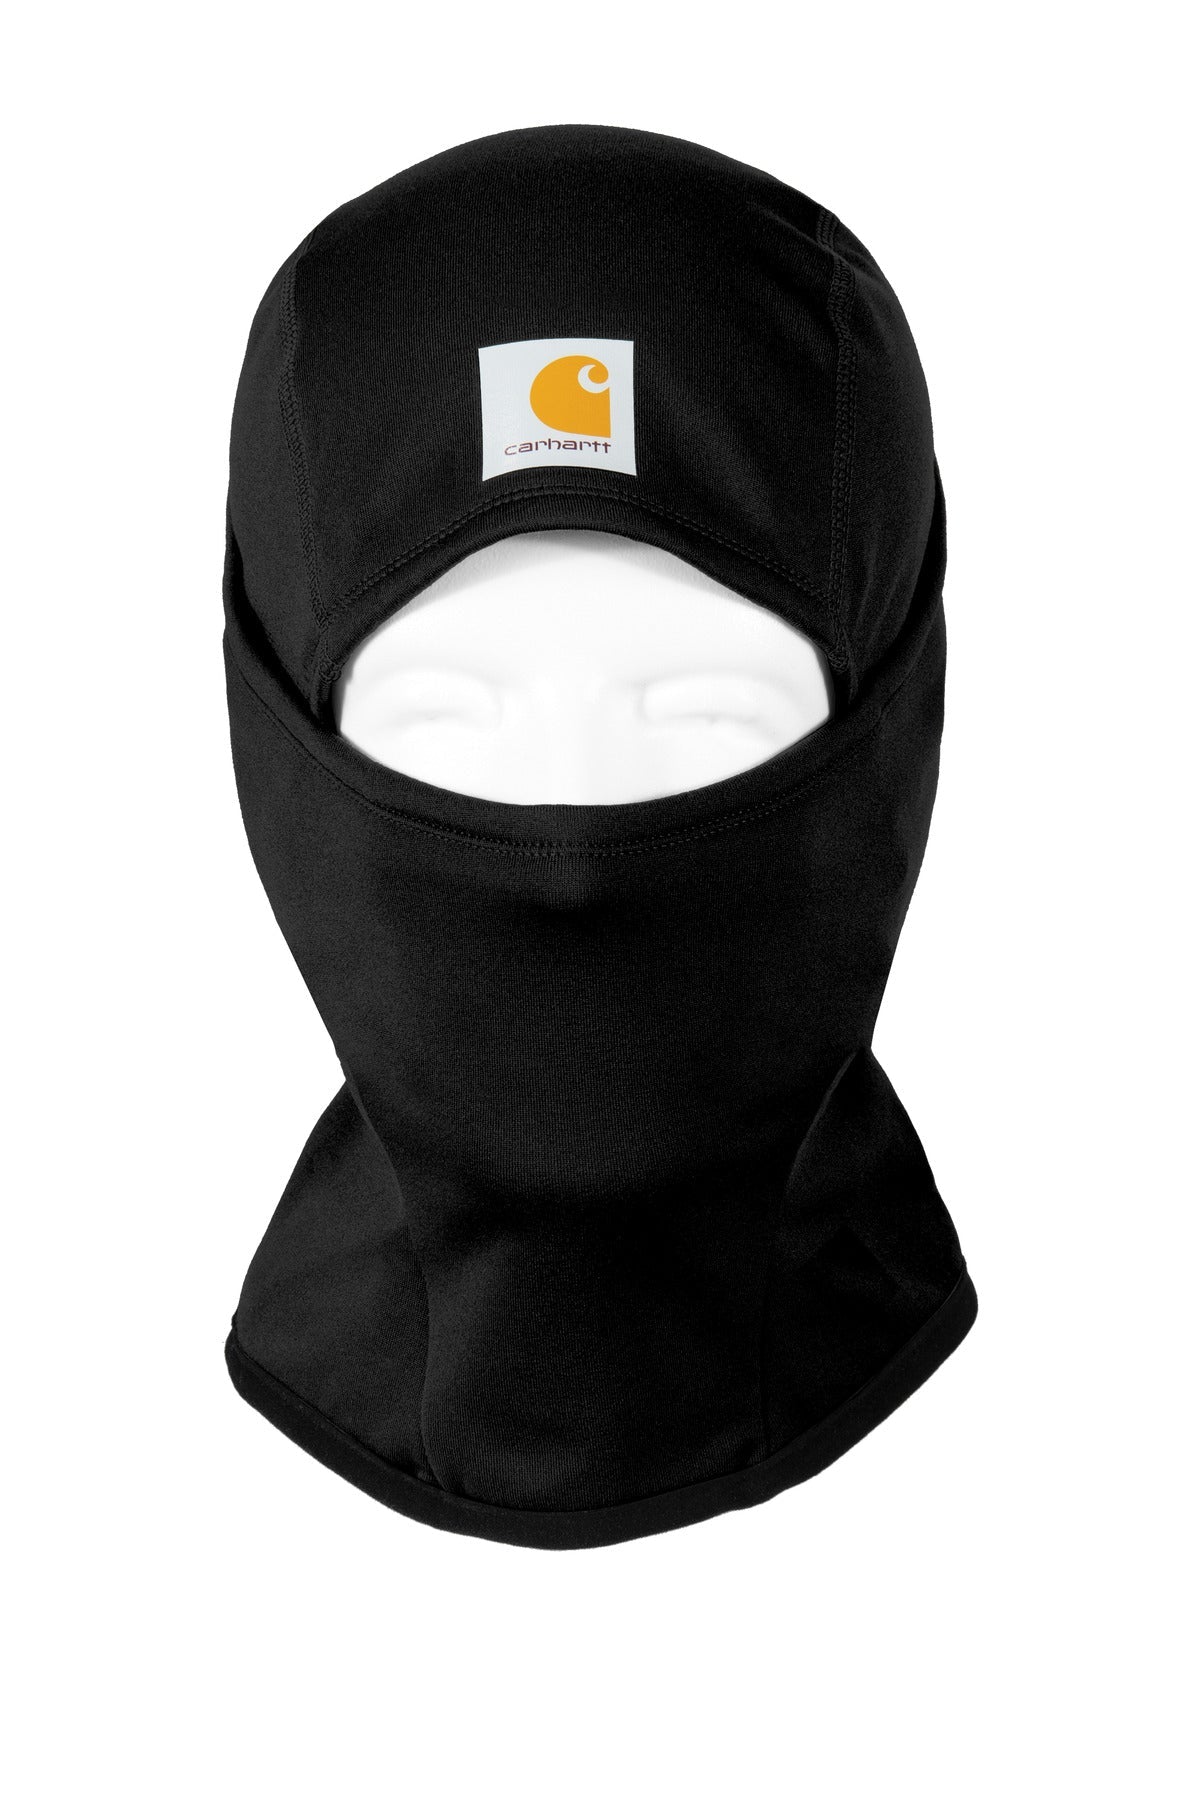 Carhartt Force ® Helmet-Liner Mask. CTA267 - DFW Impression